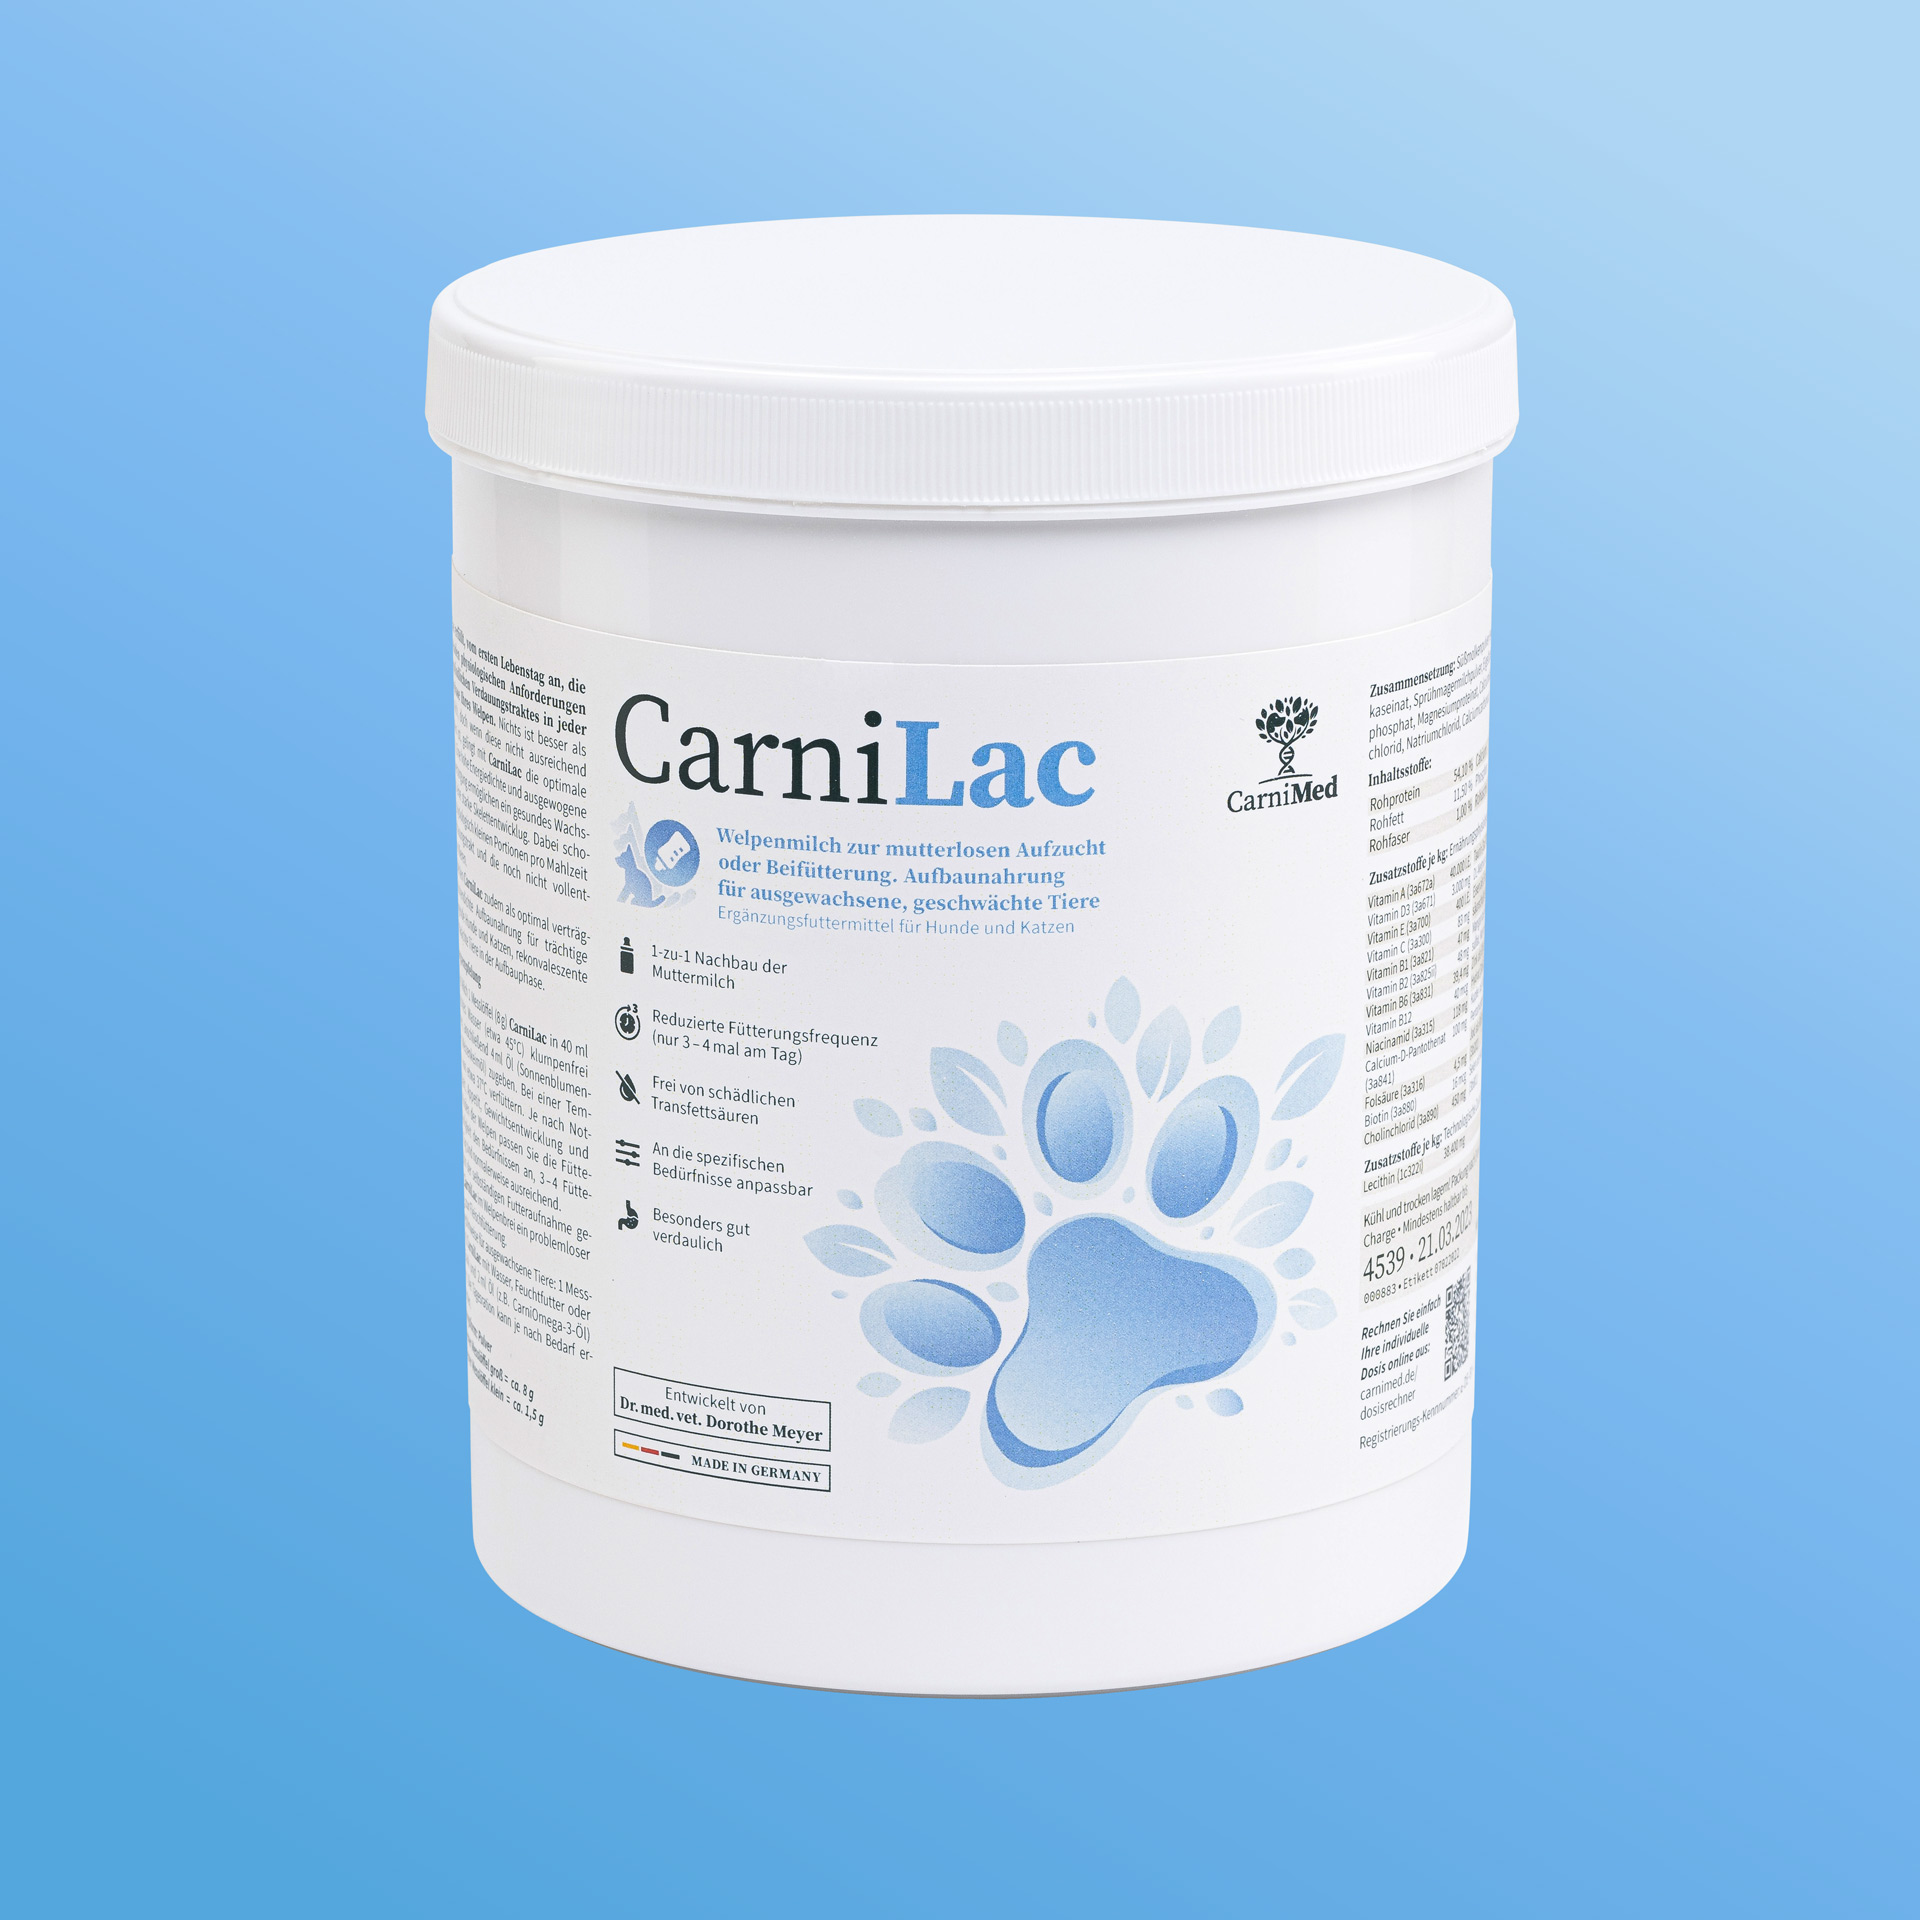 CarniLac - The revolution of puppy milk